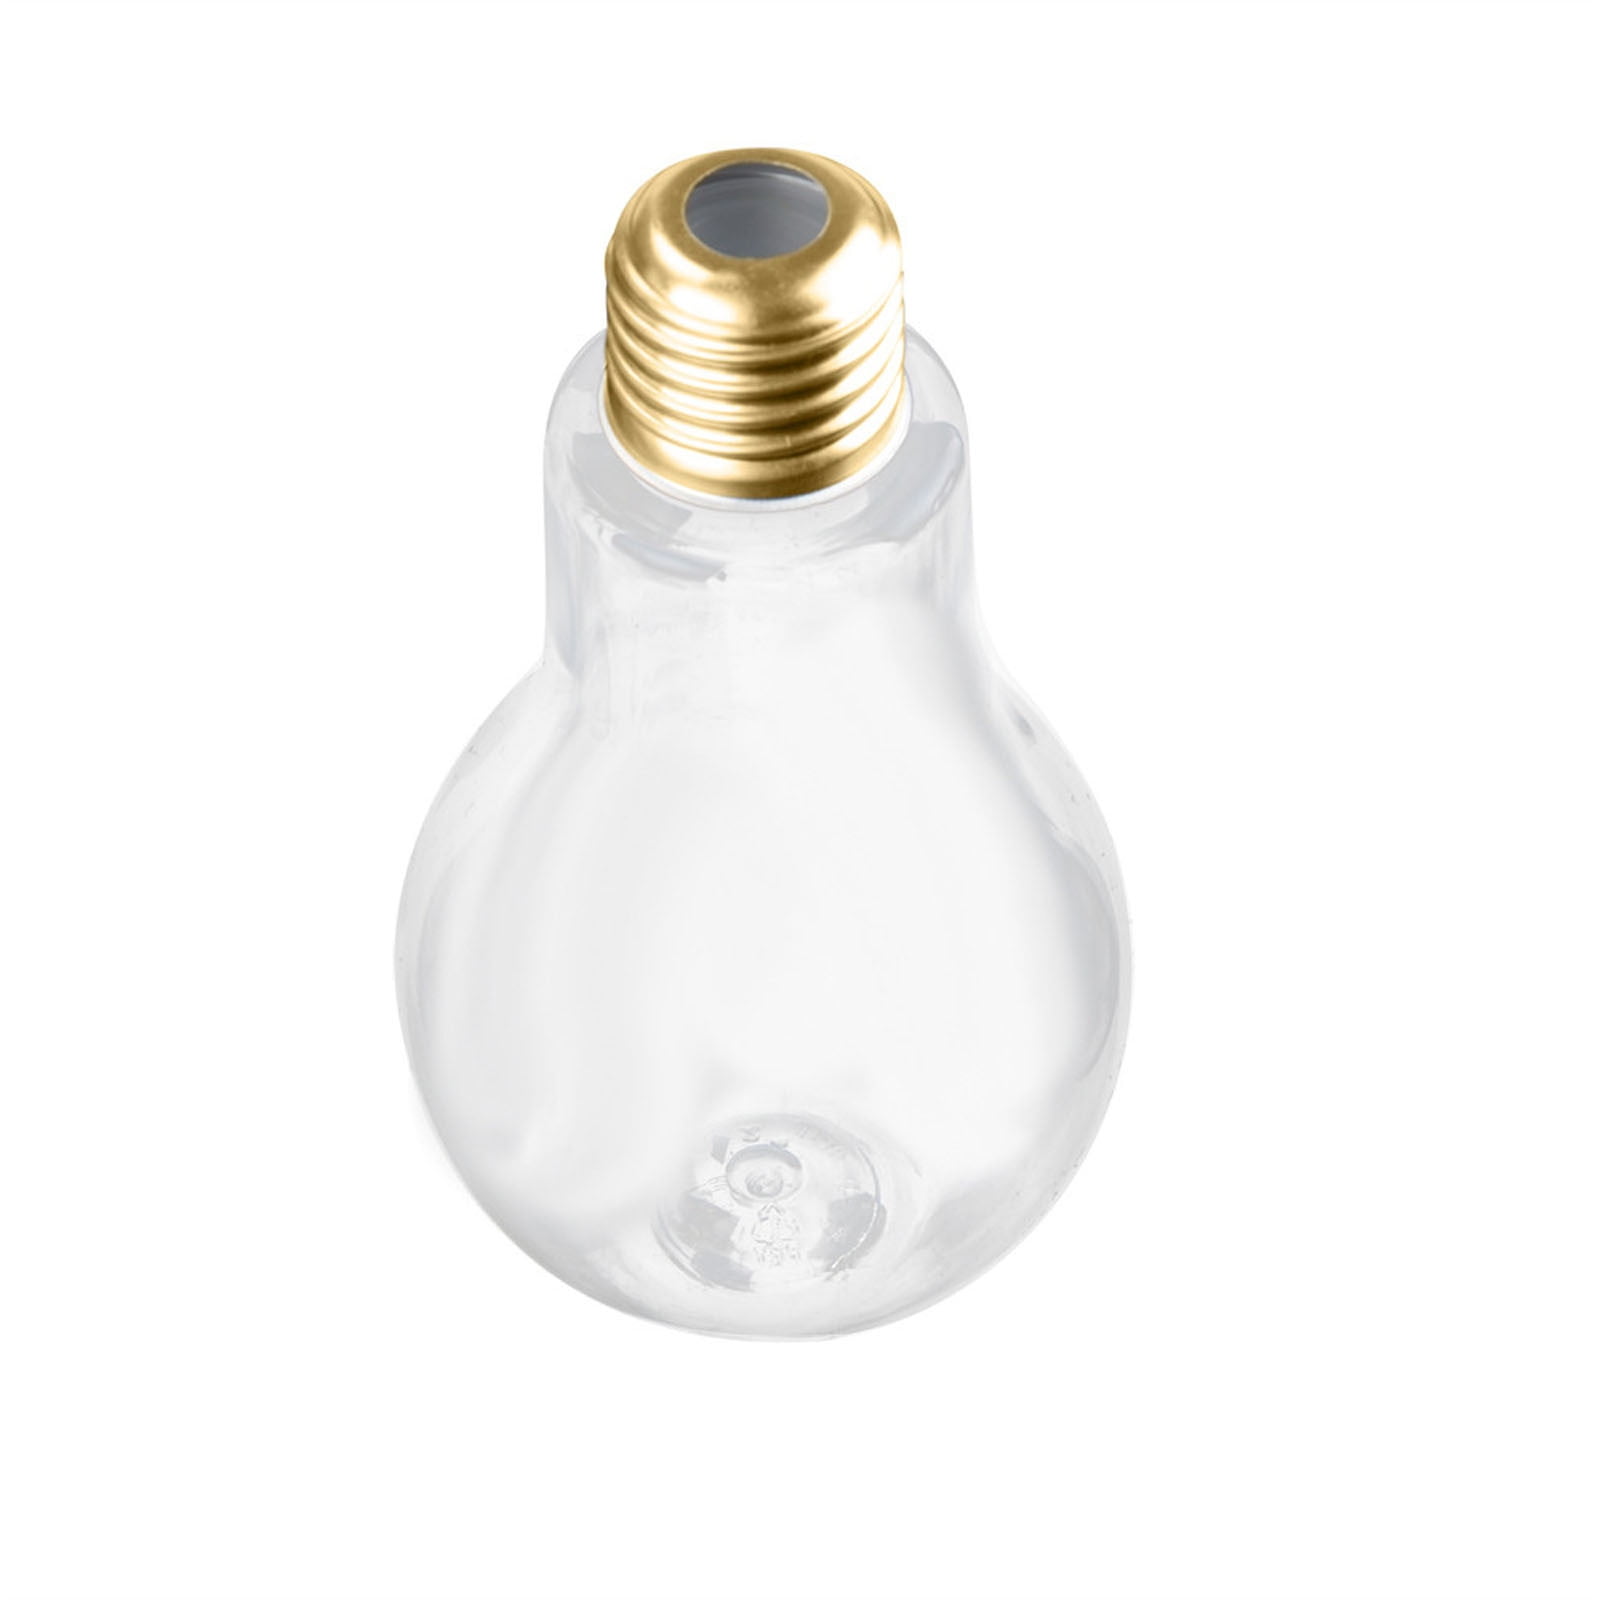 Fun Bubble Drinking Glass - Light Bulb from Apollo Box